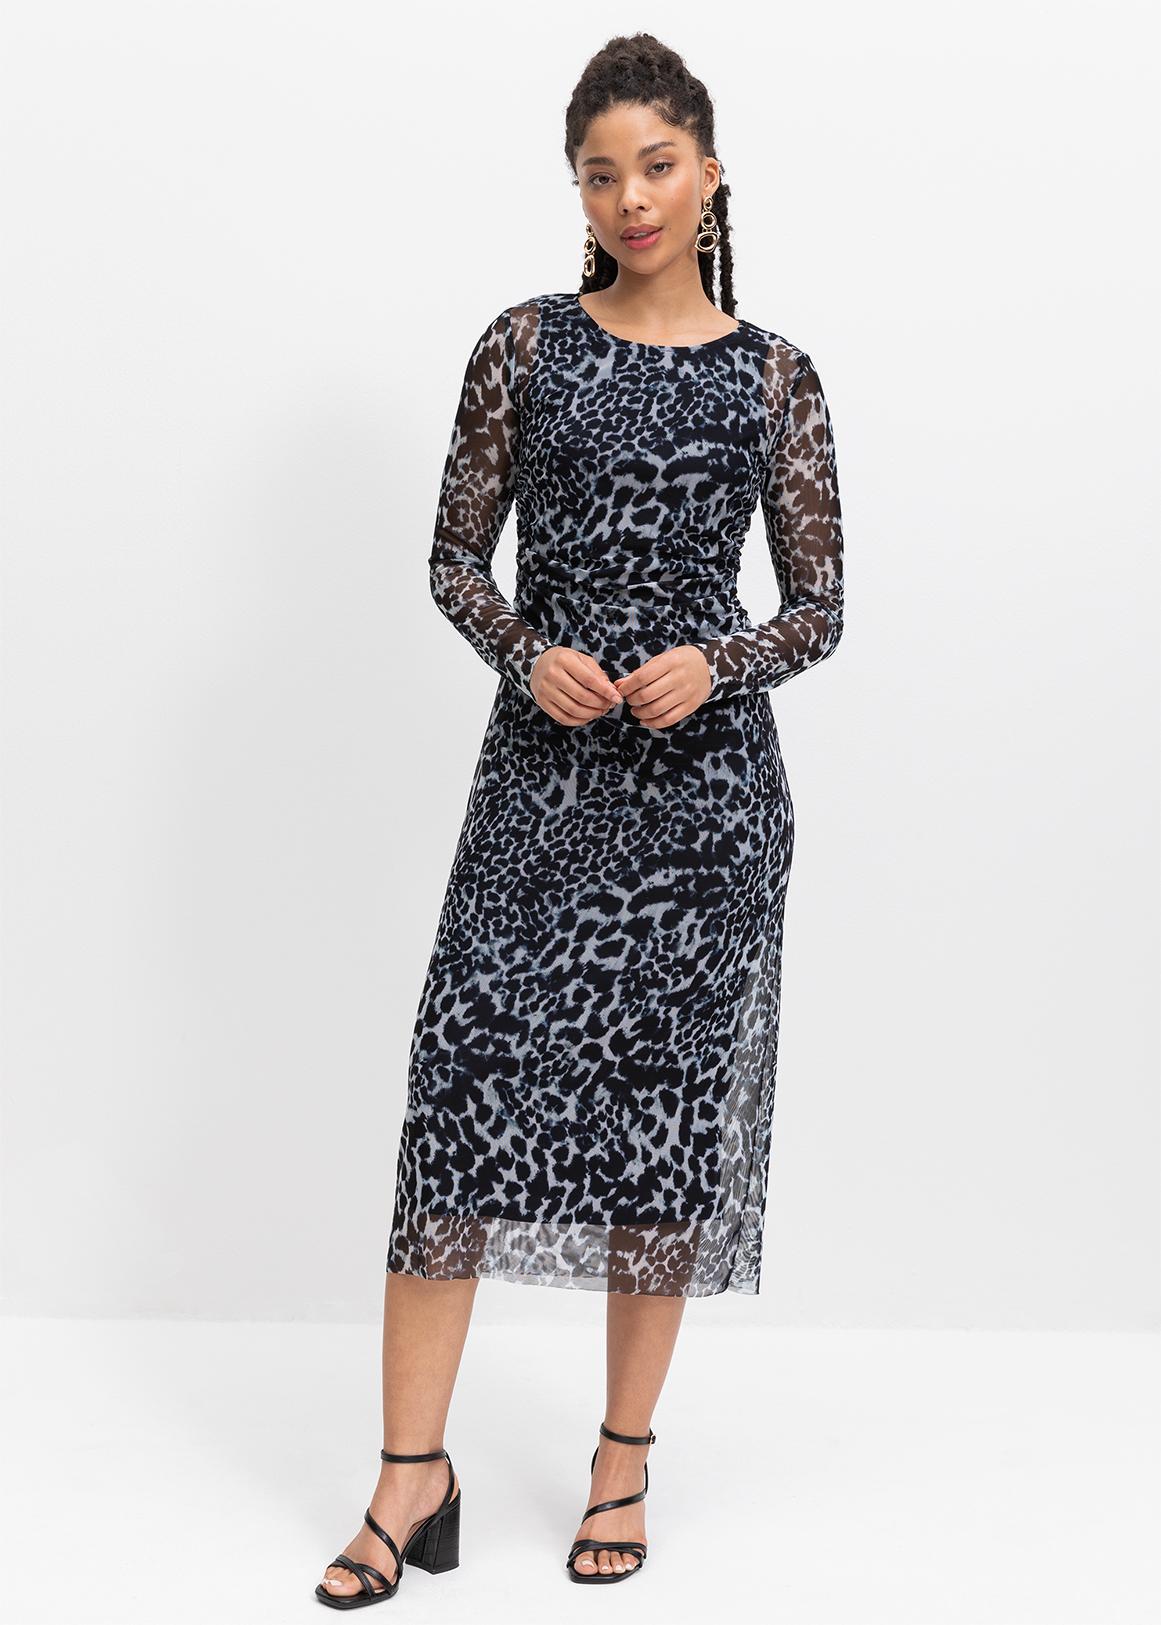 Sheer Mesh Leopard Print Bodycon Dress